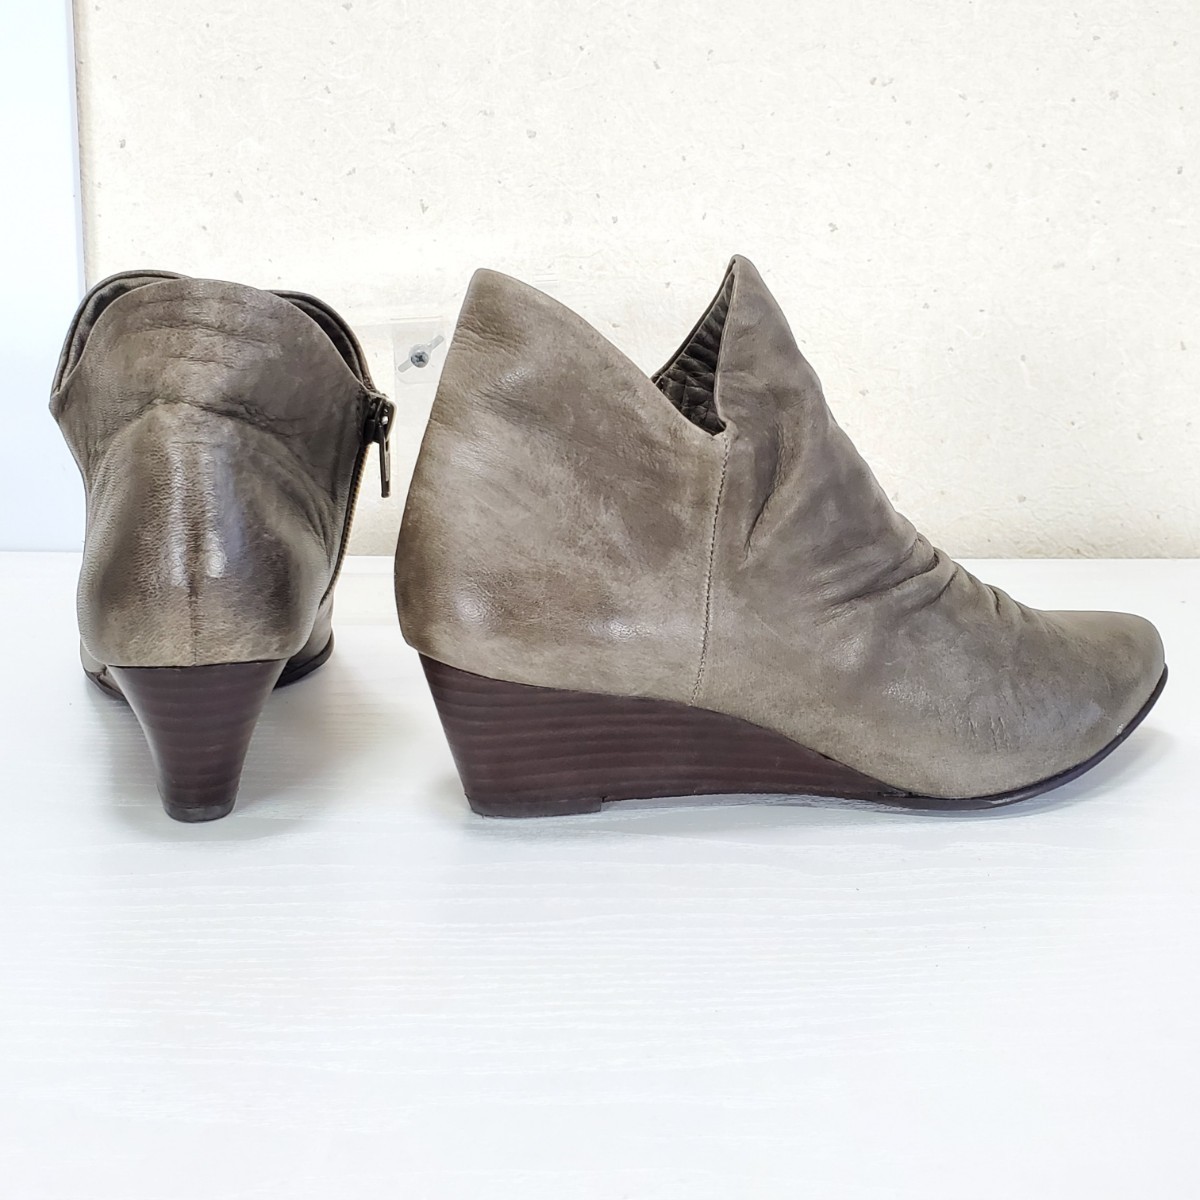  beautiful goods *MODE KAORI mode kaoli original leather bootie - pumps Wedge sole lady's (23.0cm) gray series 